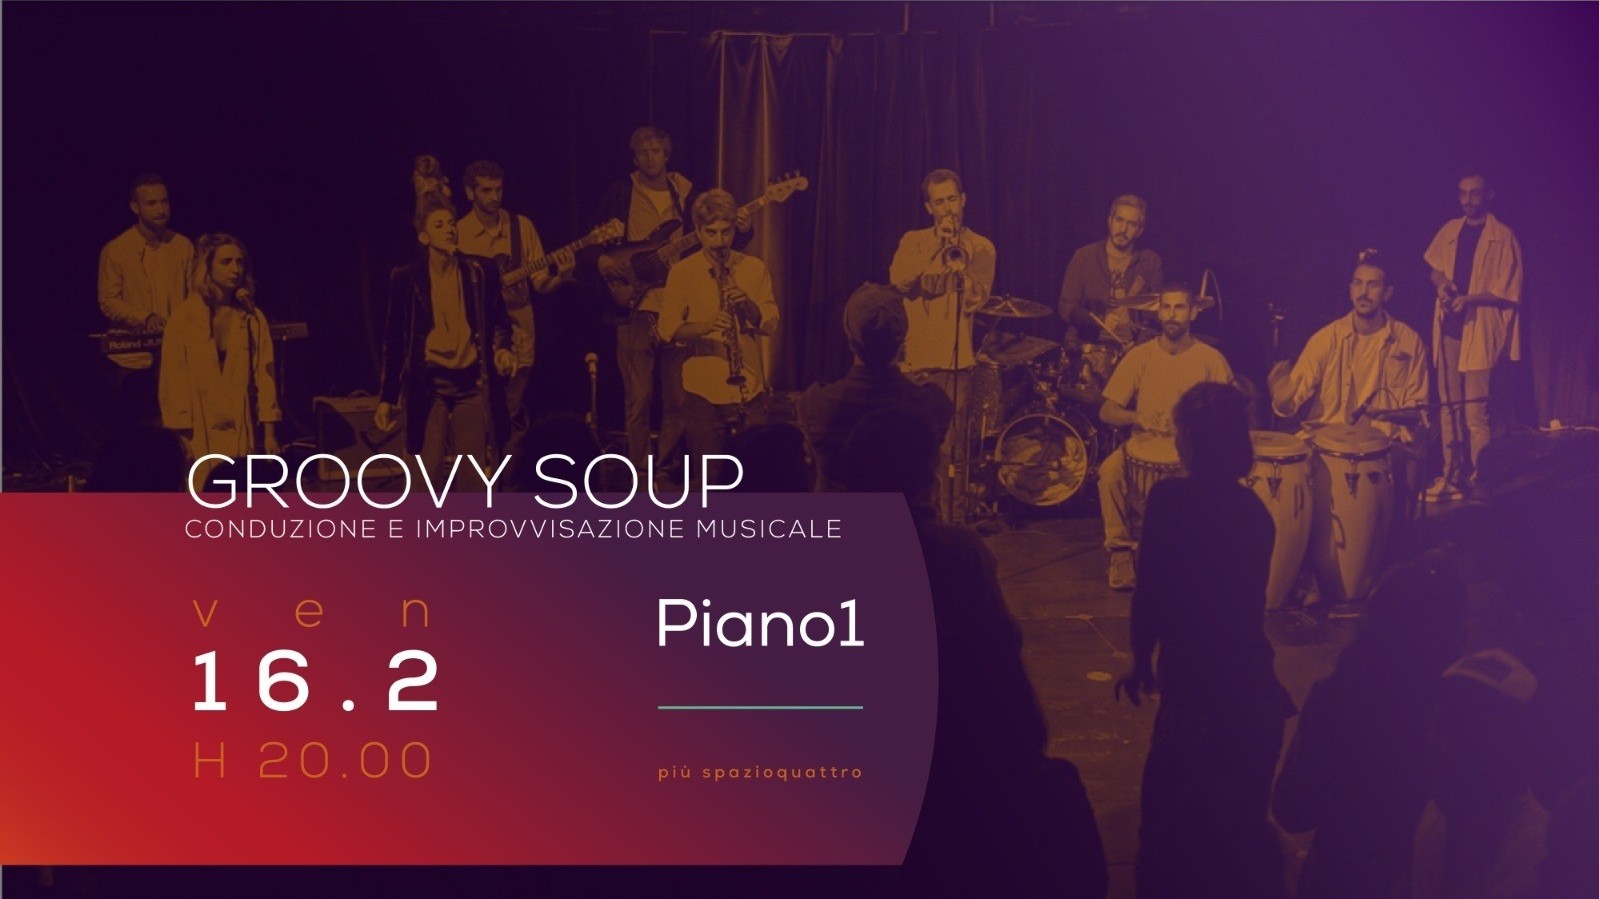 Groovy Soup - Conduzione e Improvvisazione musicale